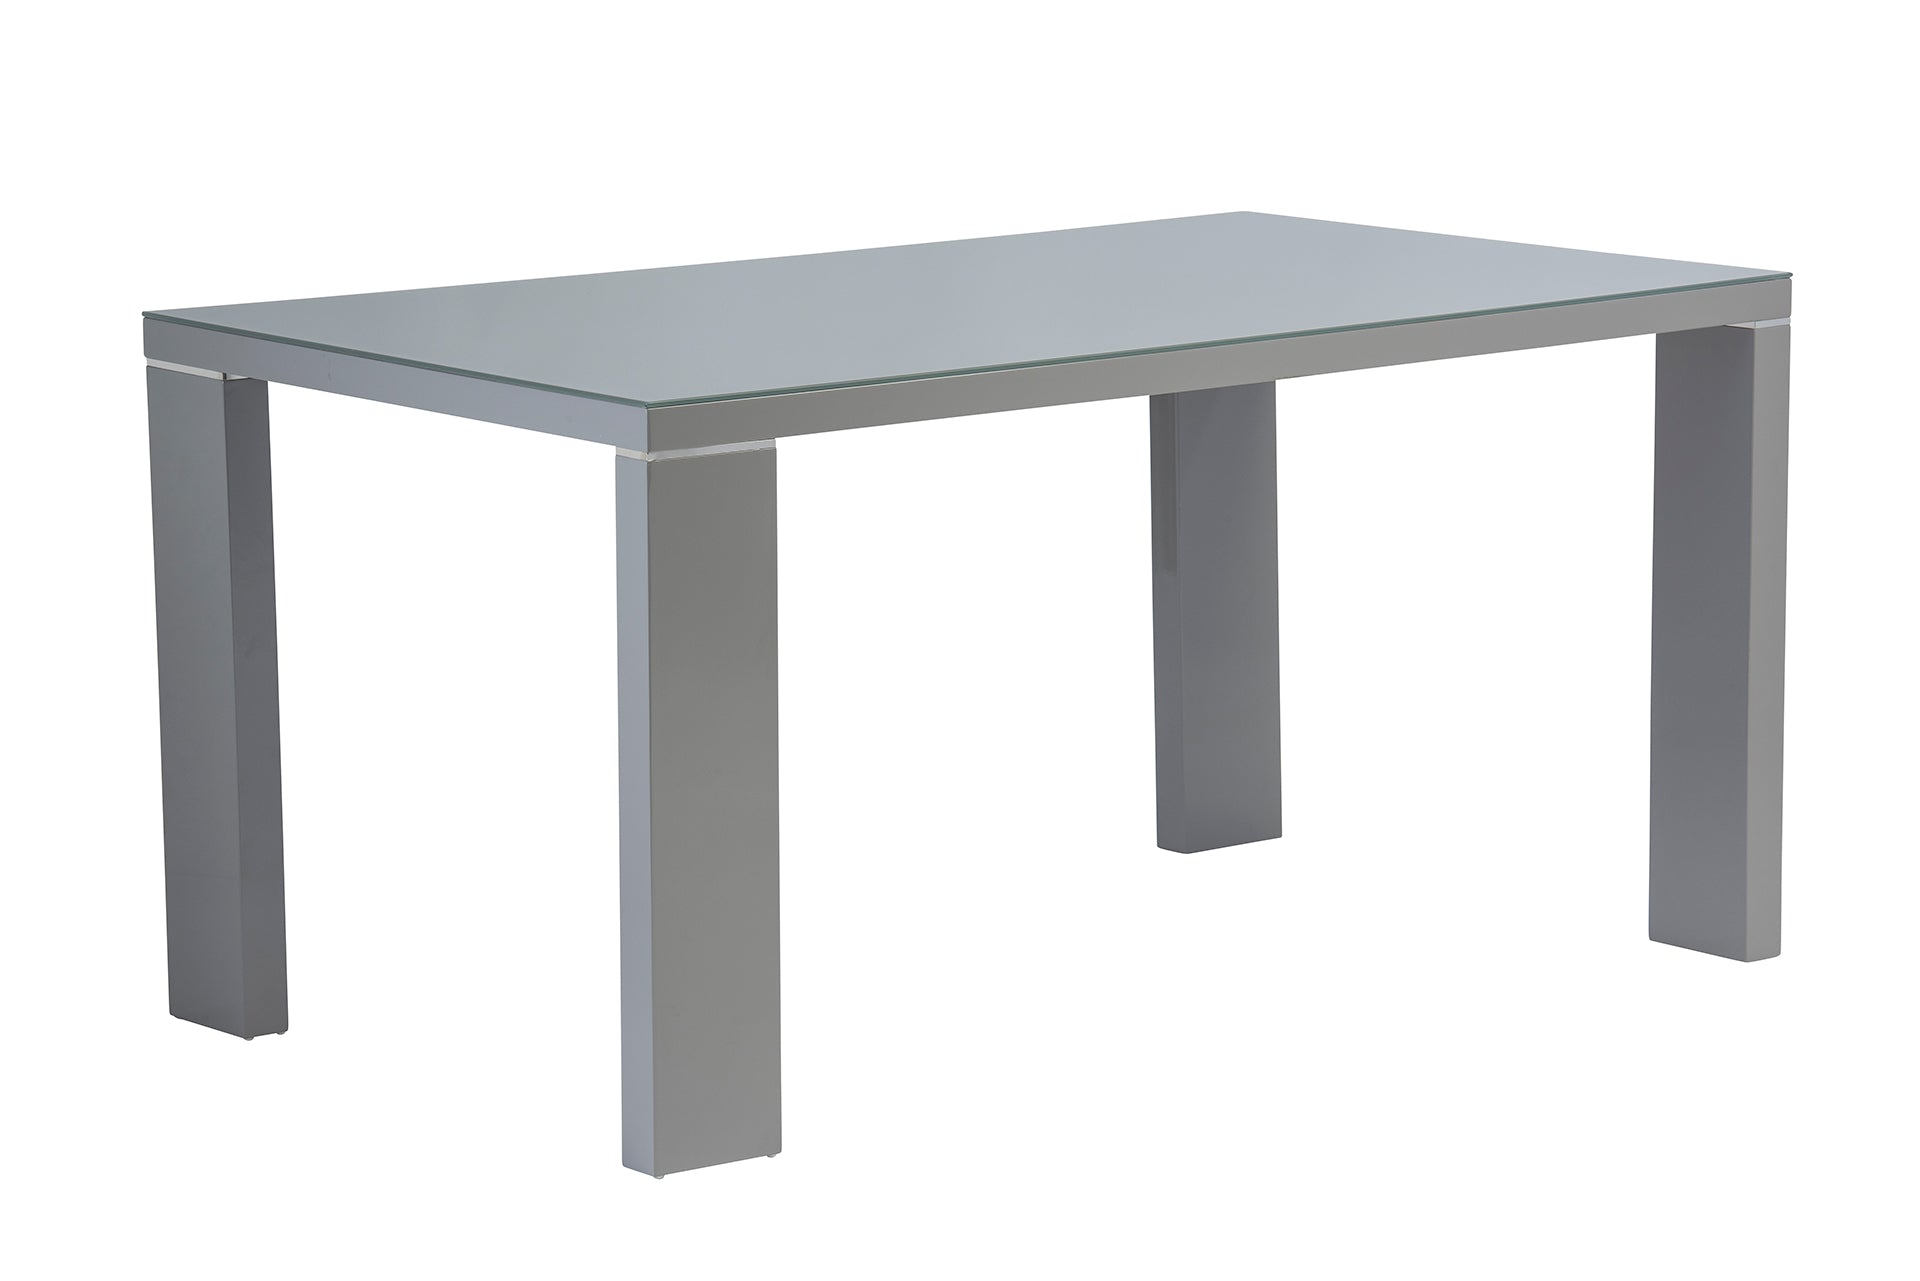 Soho 1.5m Dining Table - Grey